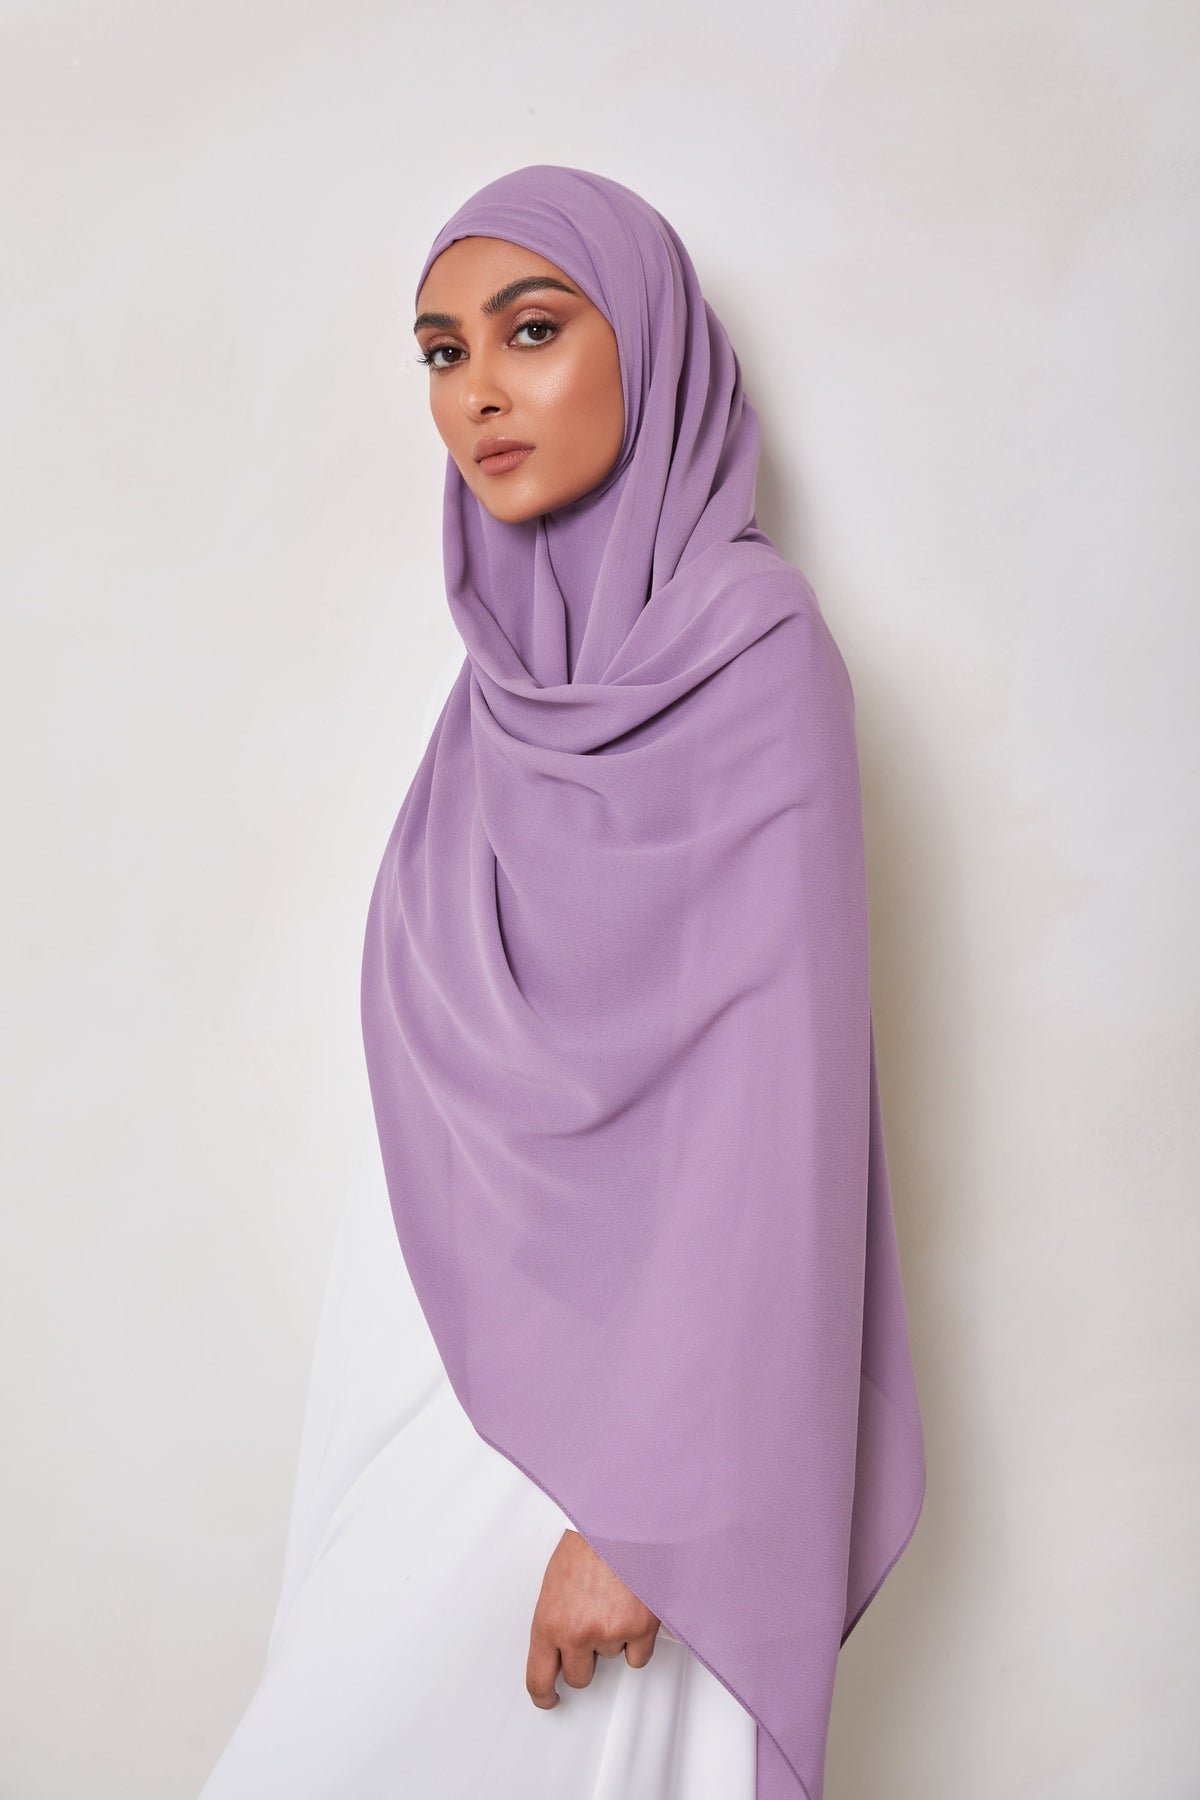 TEXTURE Everyday Chiffon Hijab - Poised in Purple epschoolboard 